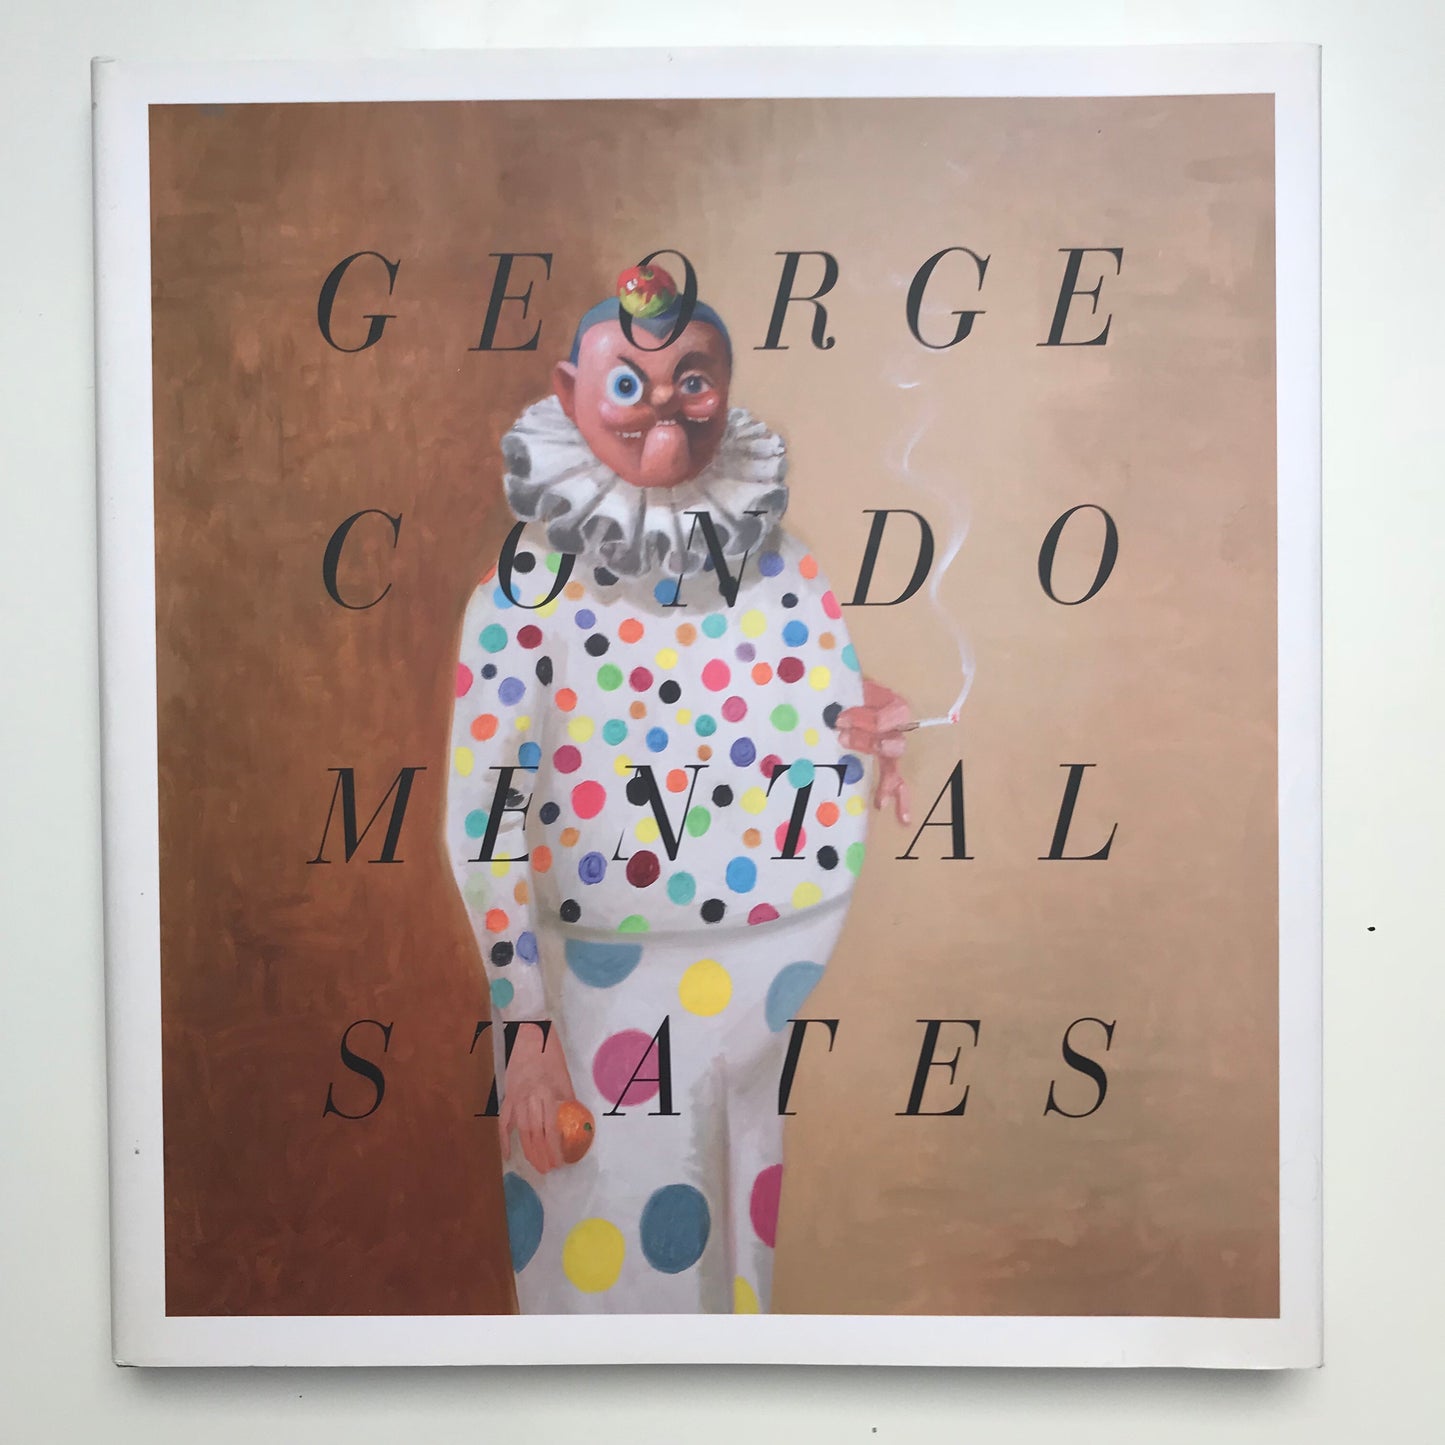 George Condo - Mental States (2011)